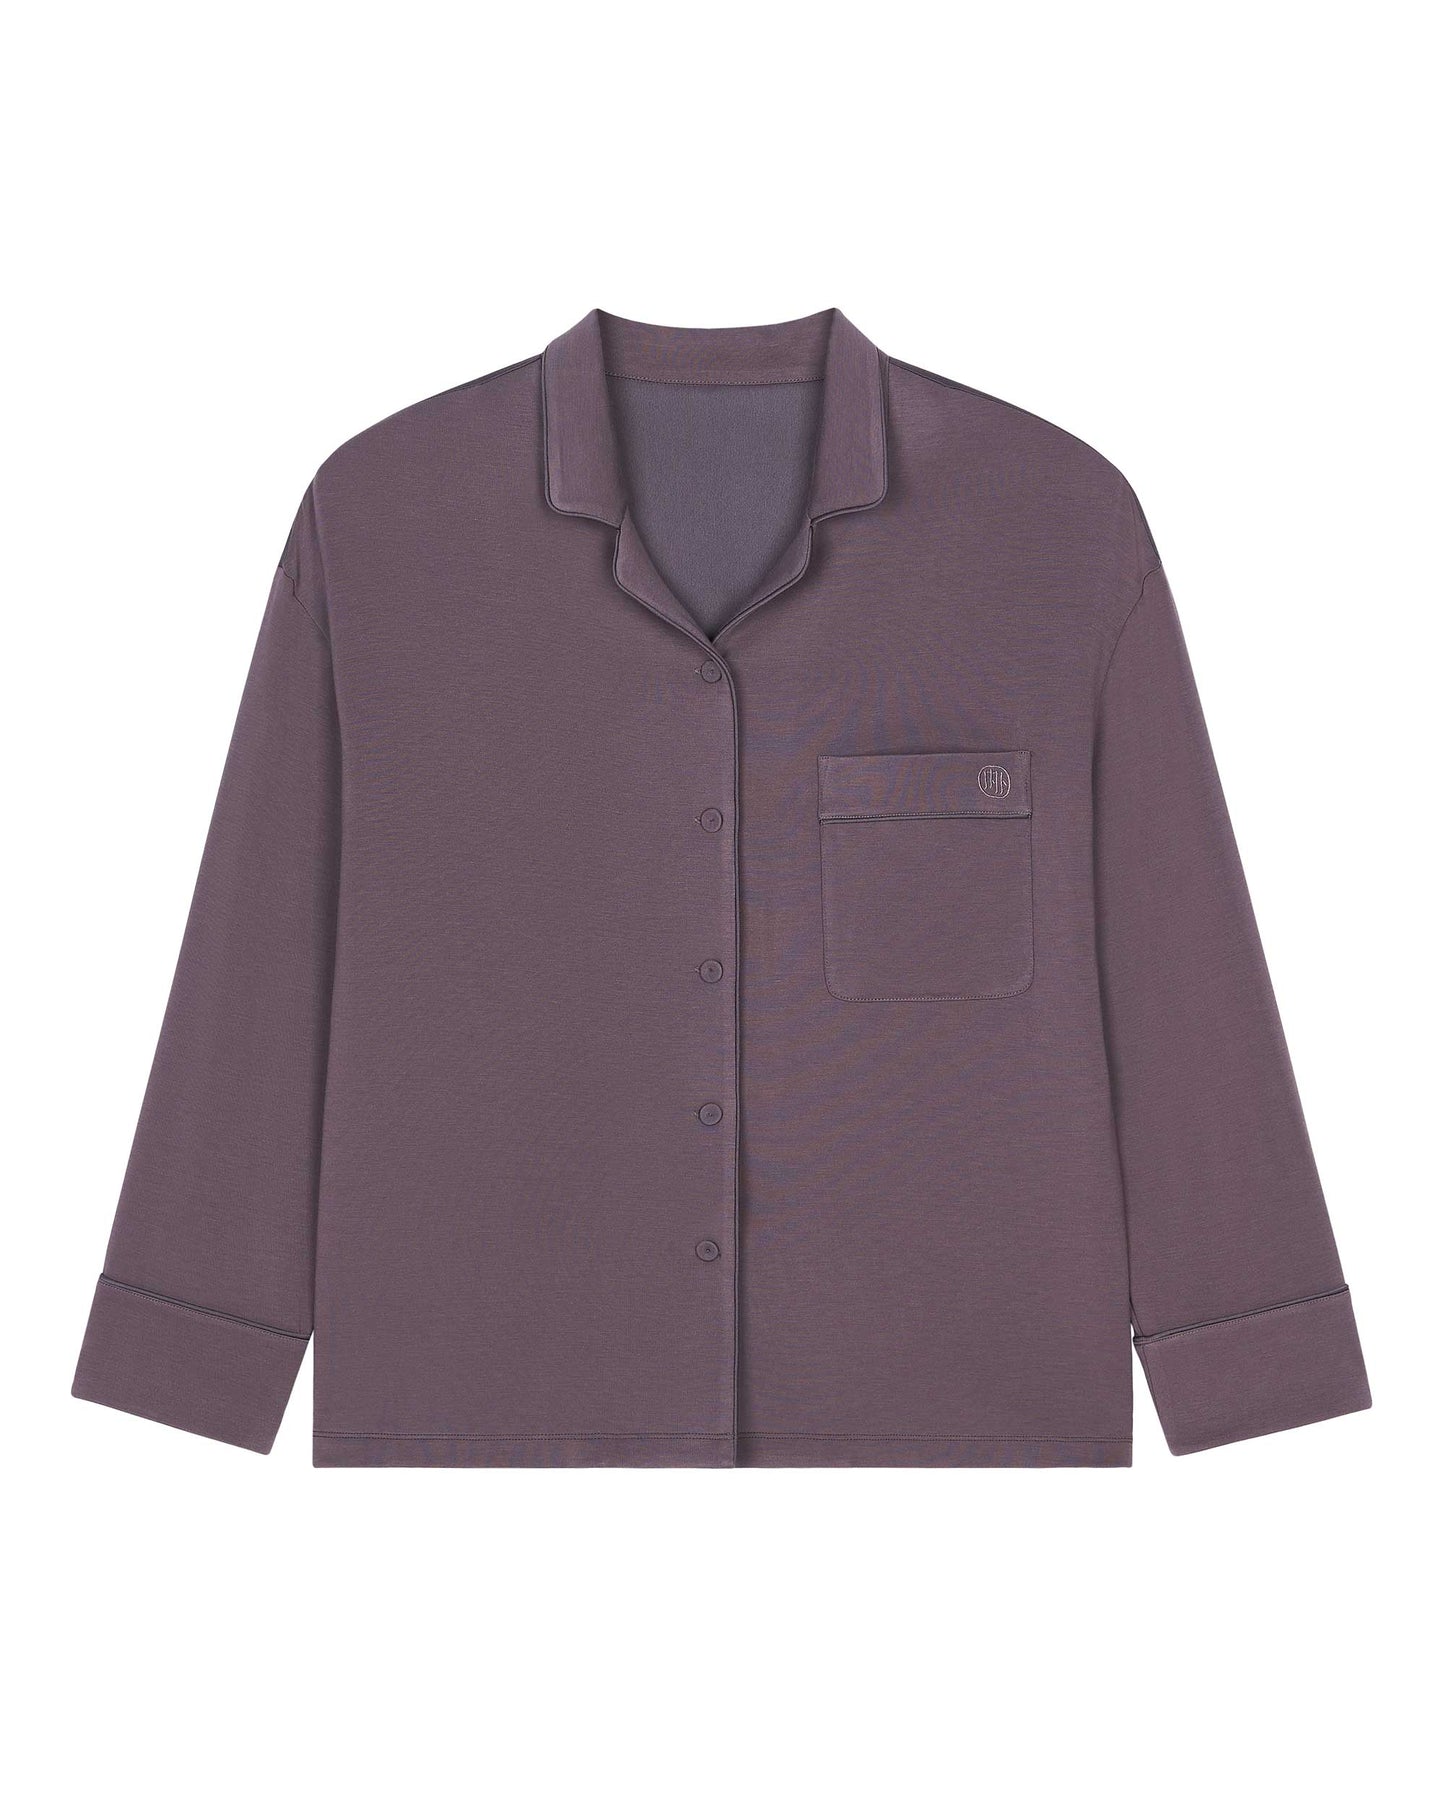 A purple pajama shirt